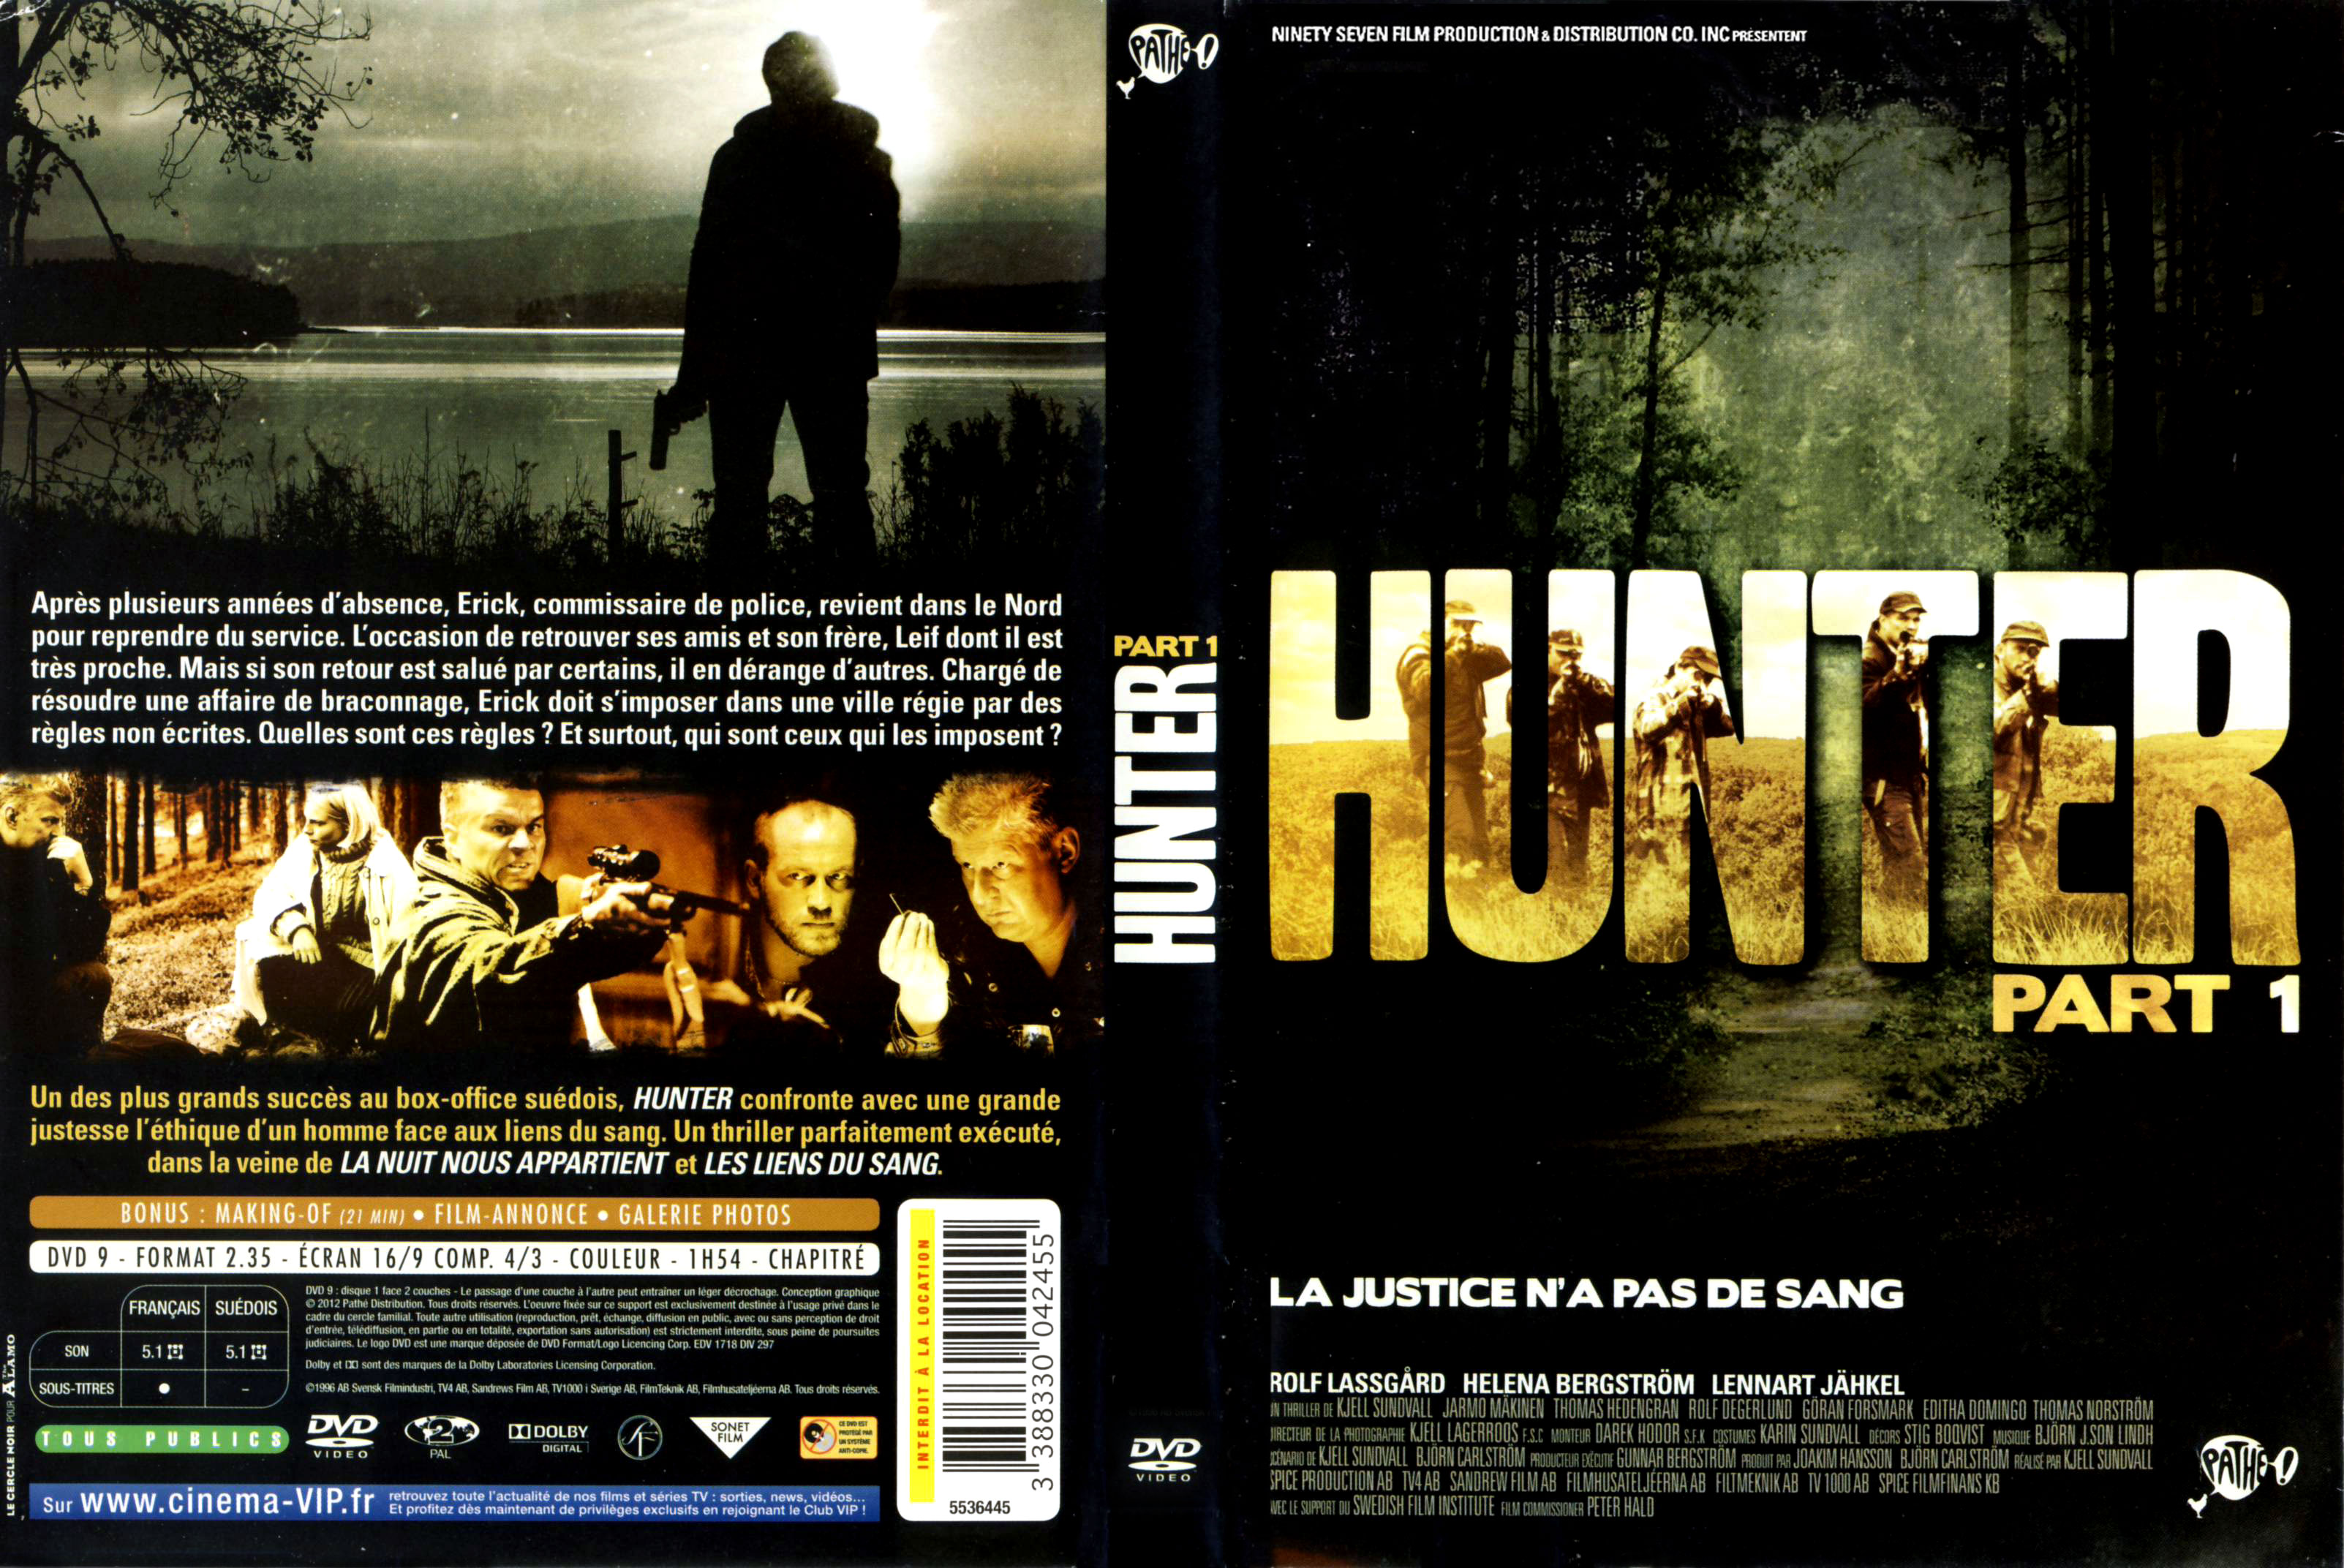 Jaquette DVD Hunter Part 1